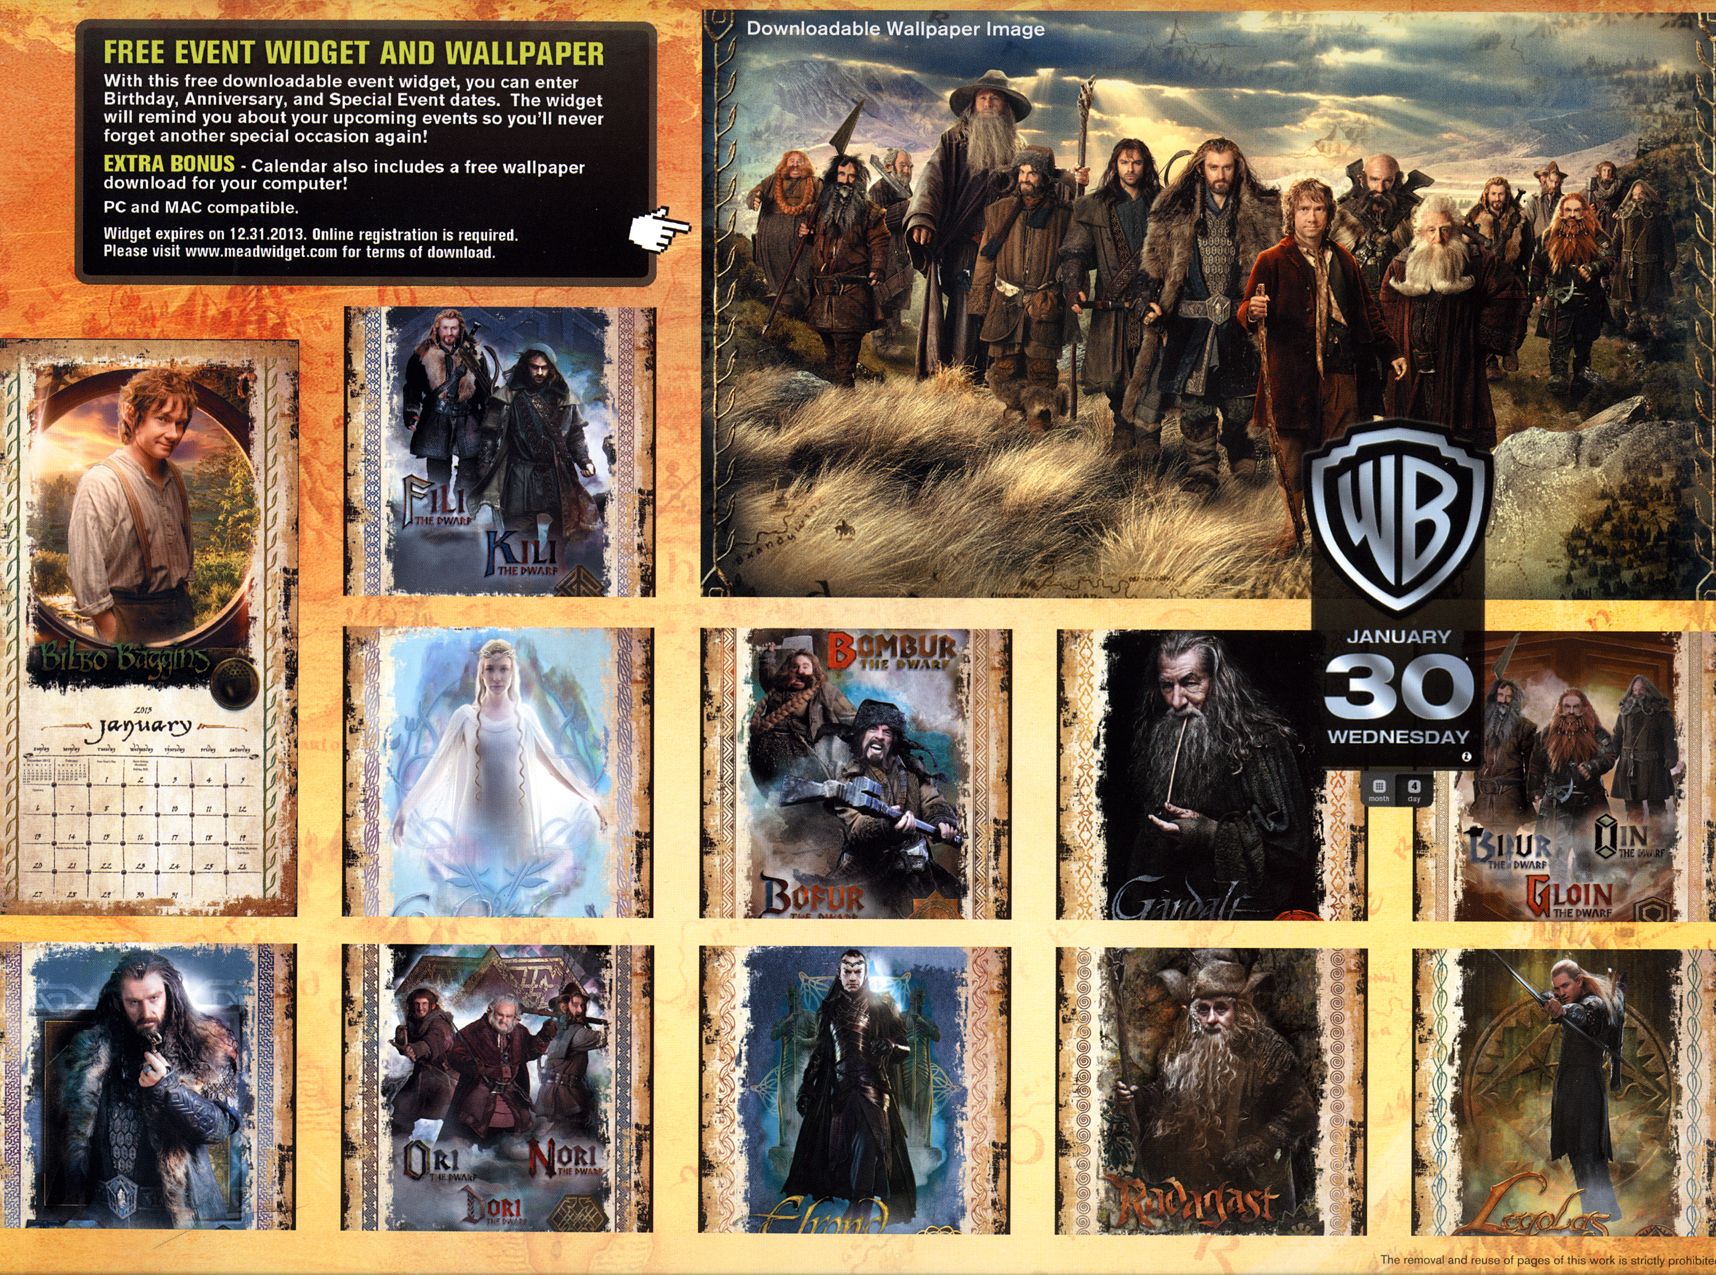 The Hobbit Calendar Photos